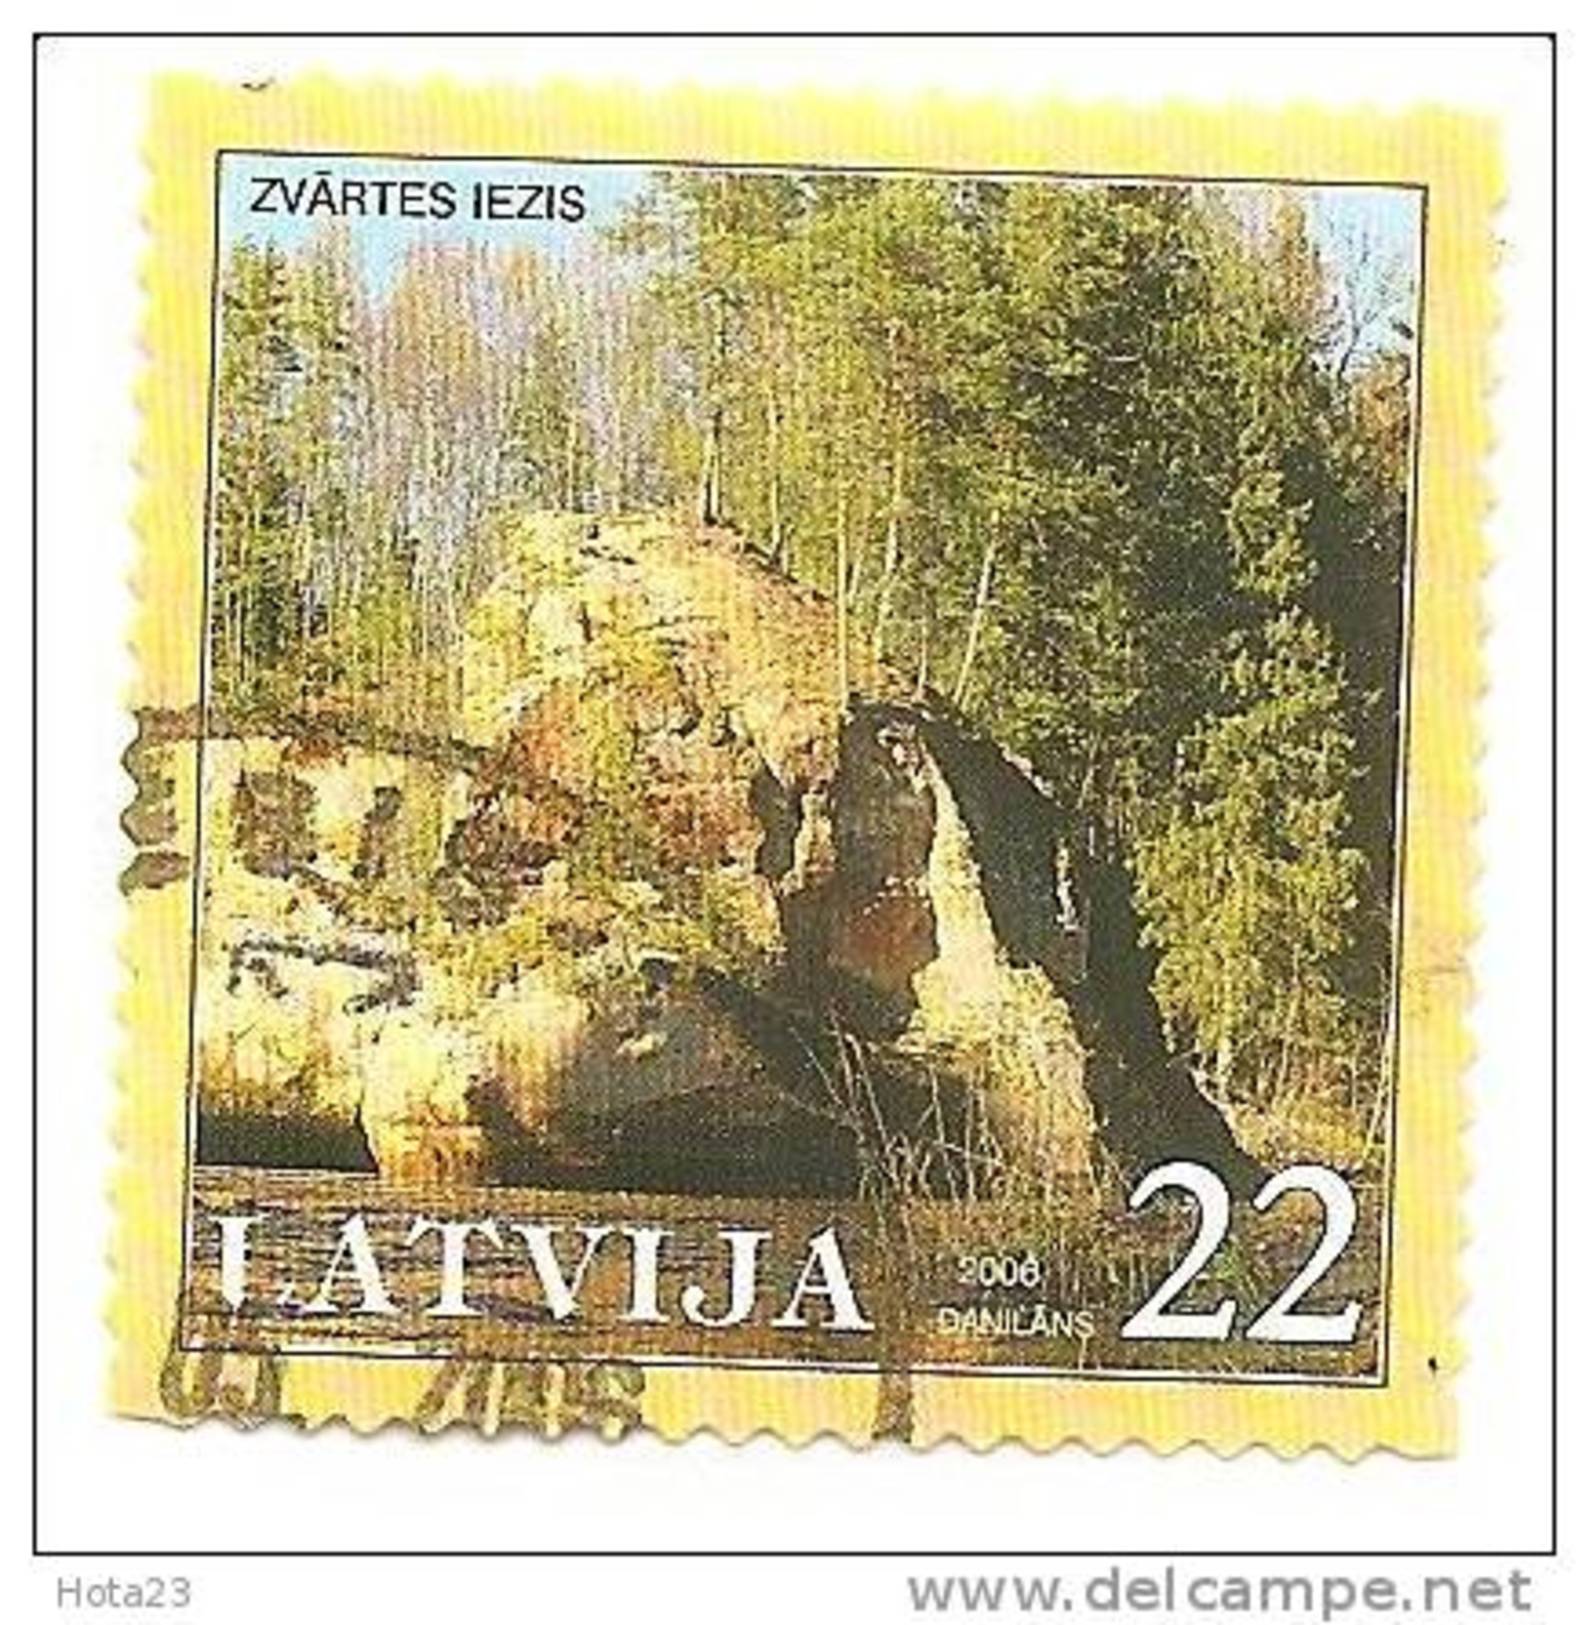 Latvia -2006 ROCK - "ZVARTA" -- Used (0) - Lettonie